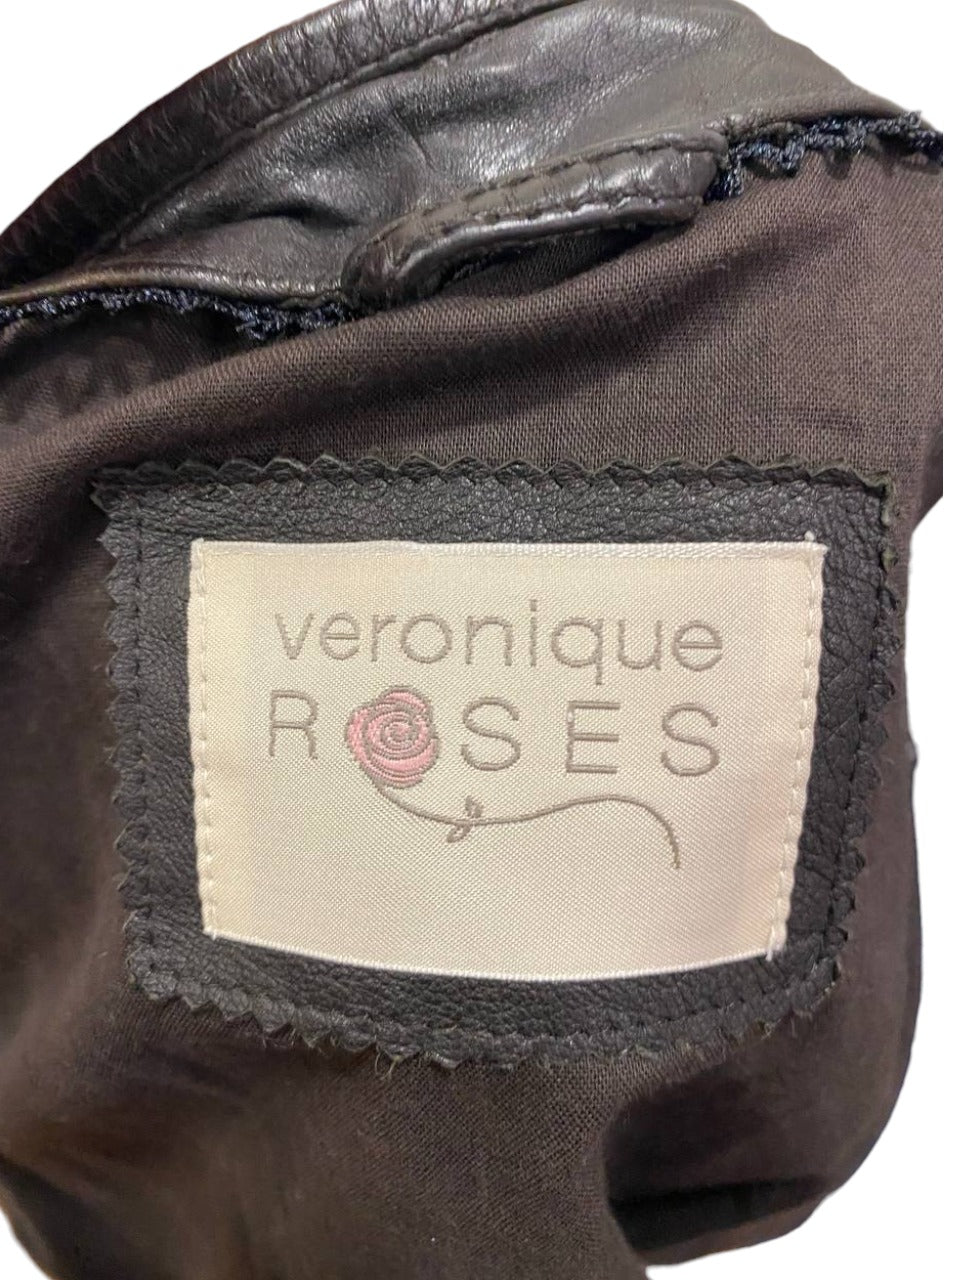 Veronique Roses Women's Leather Jacket